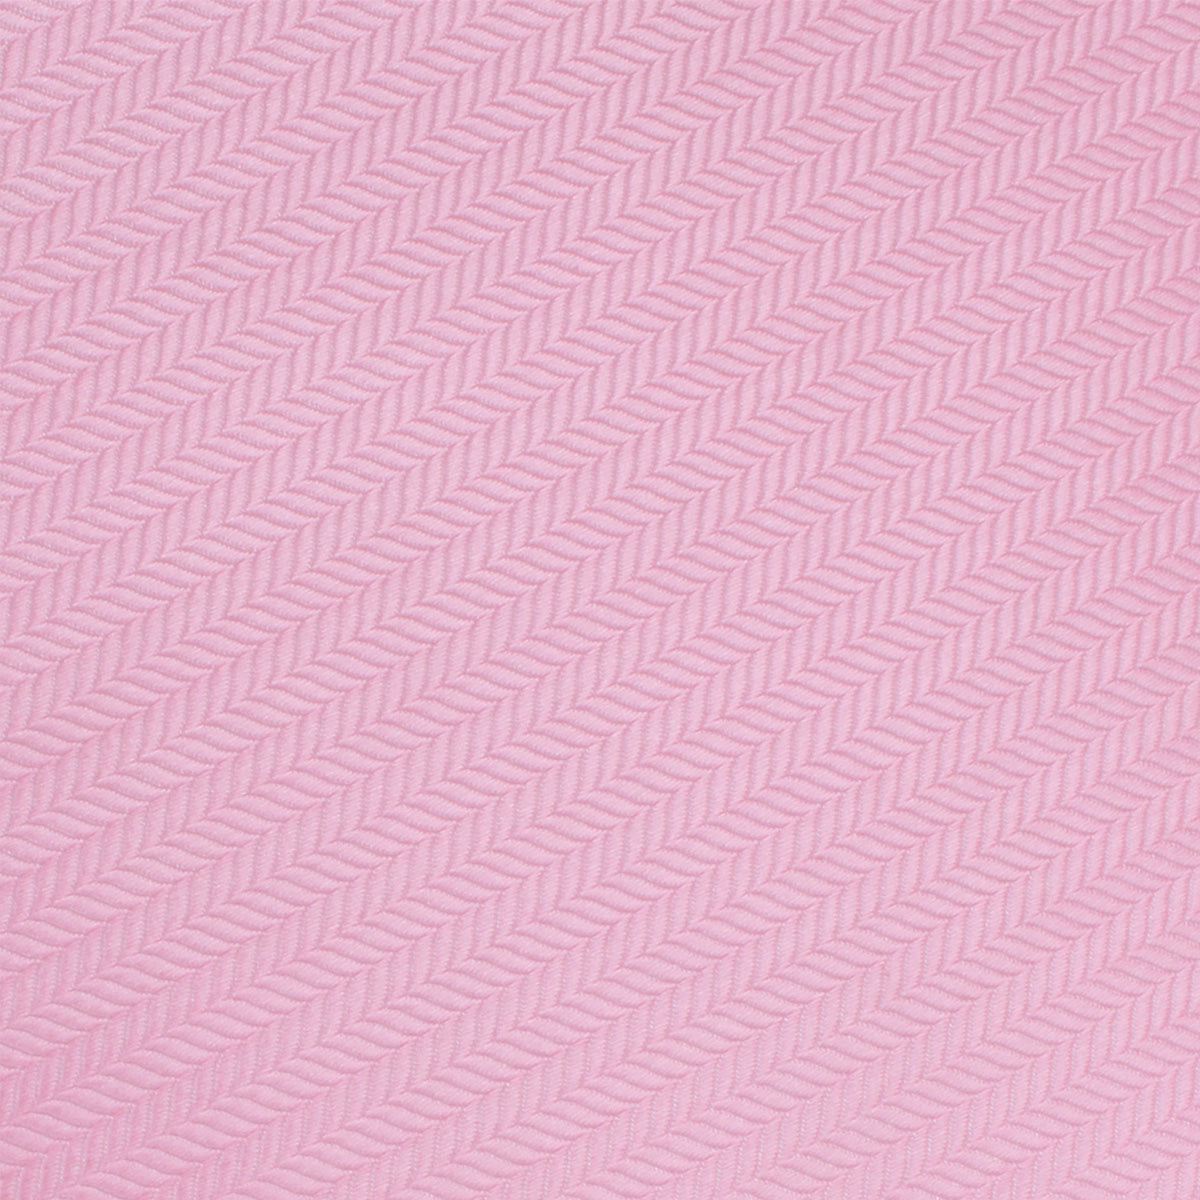 Tickled Pink Herringbone Chevron Skinny Tie Fabric